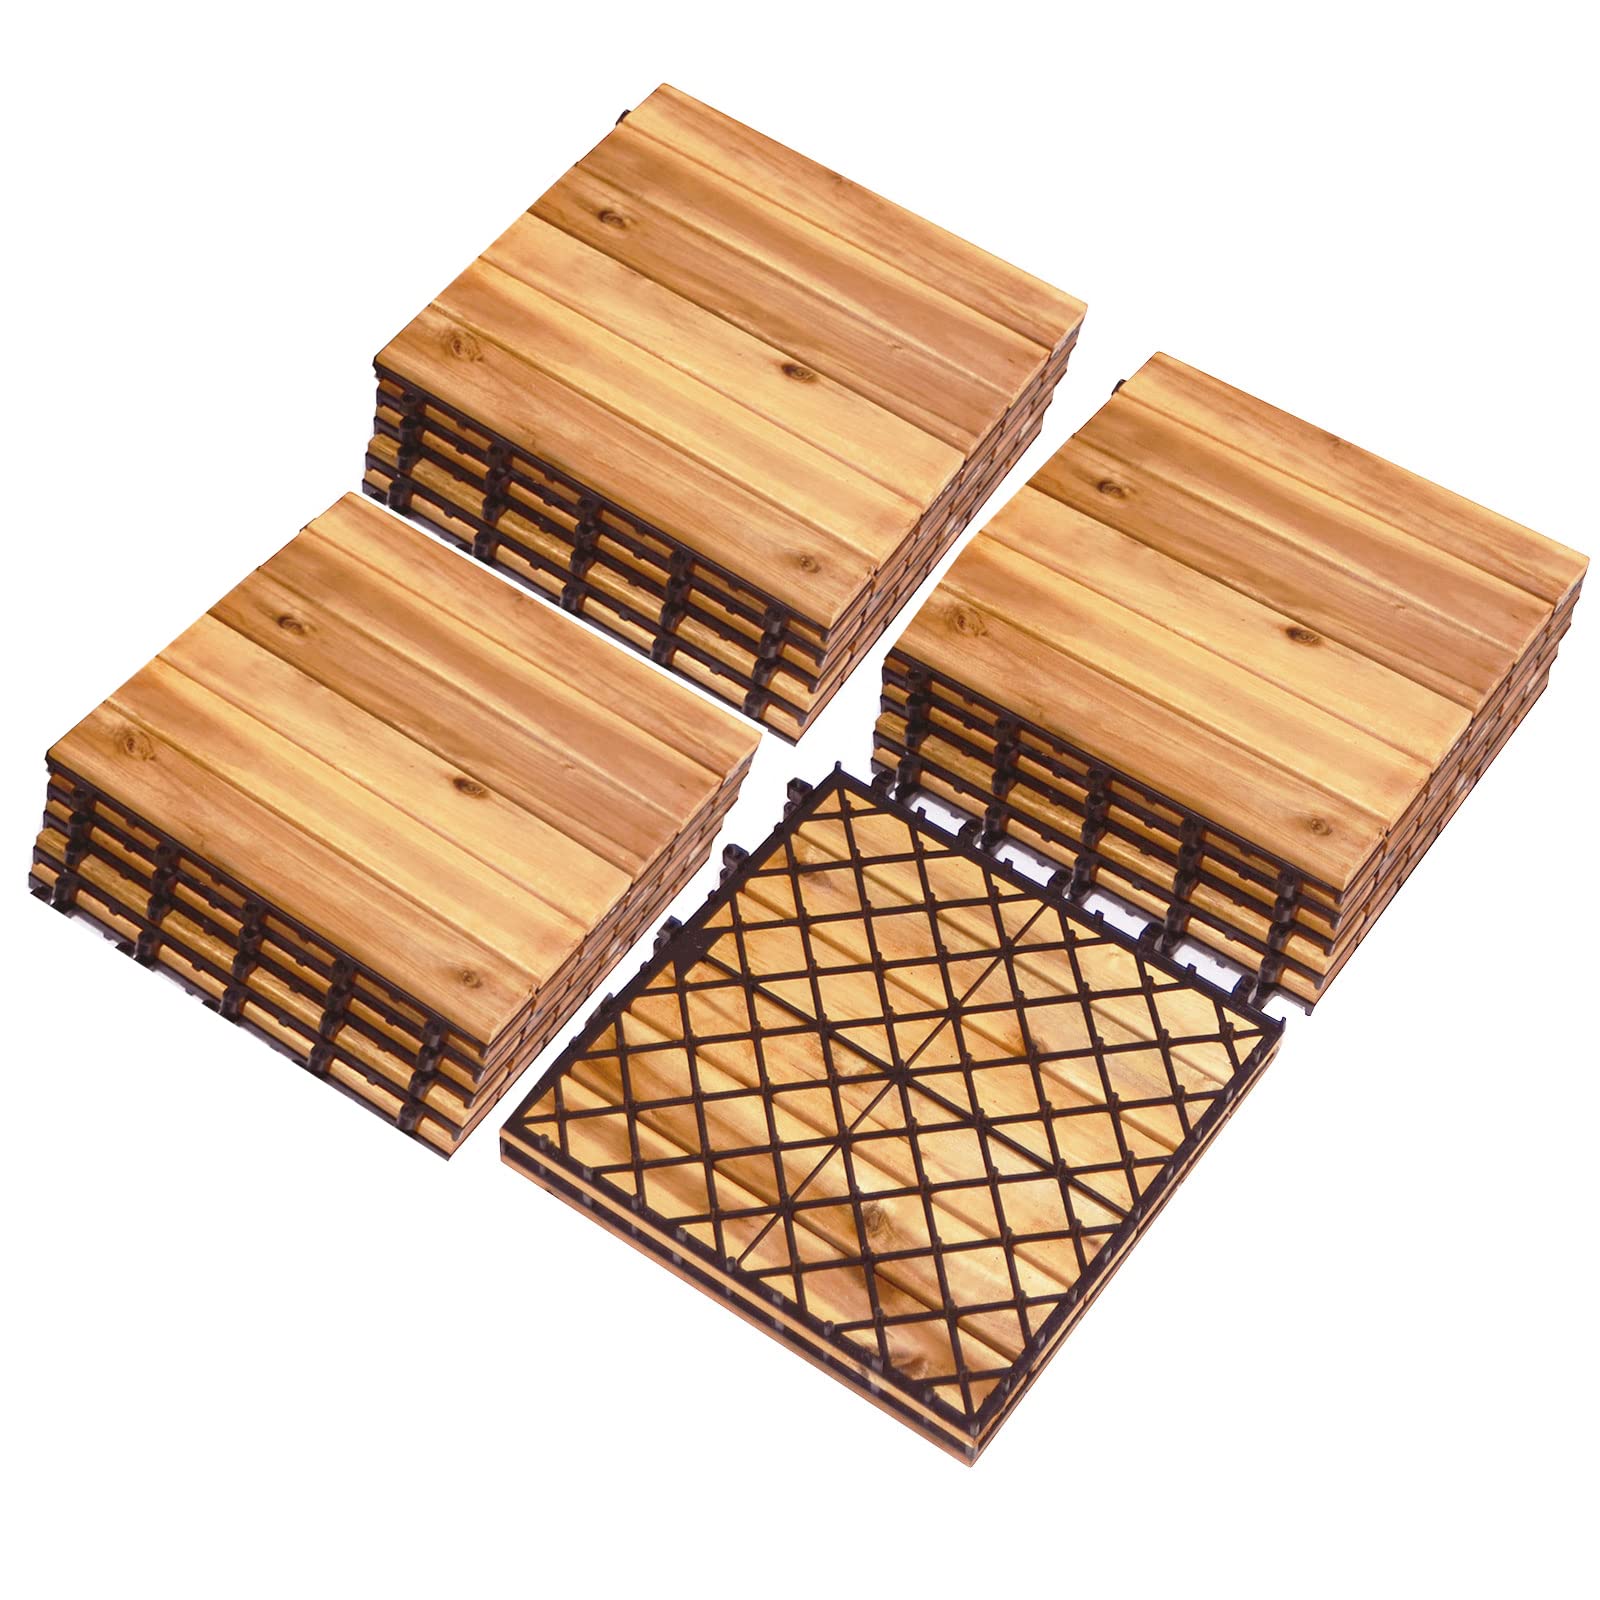 Giantex 27 PCS Interlocking Patio Deck Tiles, 12 x 12in Acacia Hardwood Floor Tiles, Tools Free Assembly